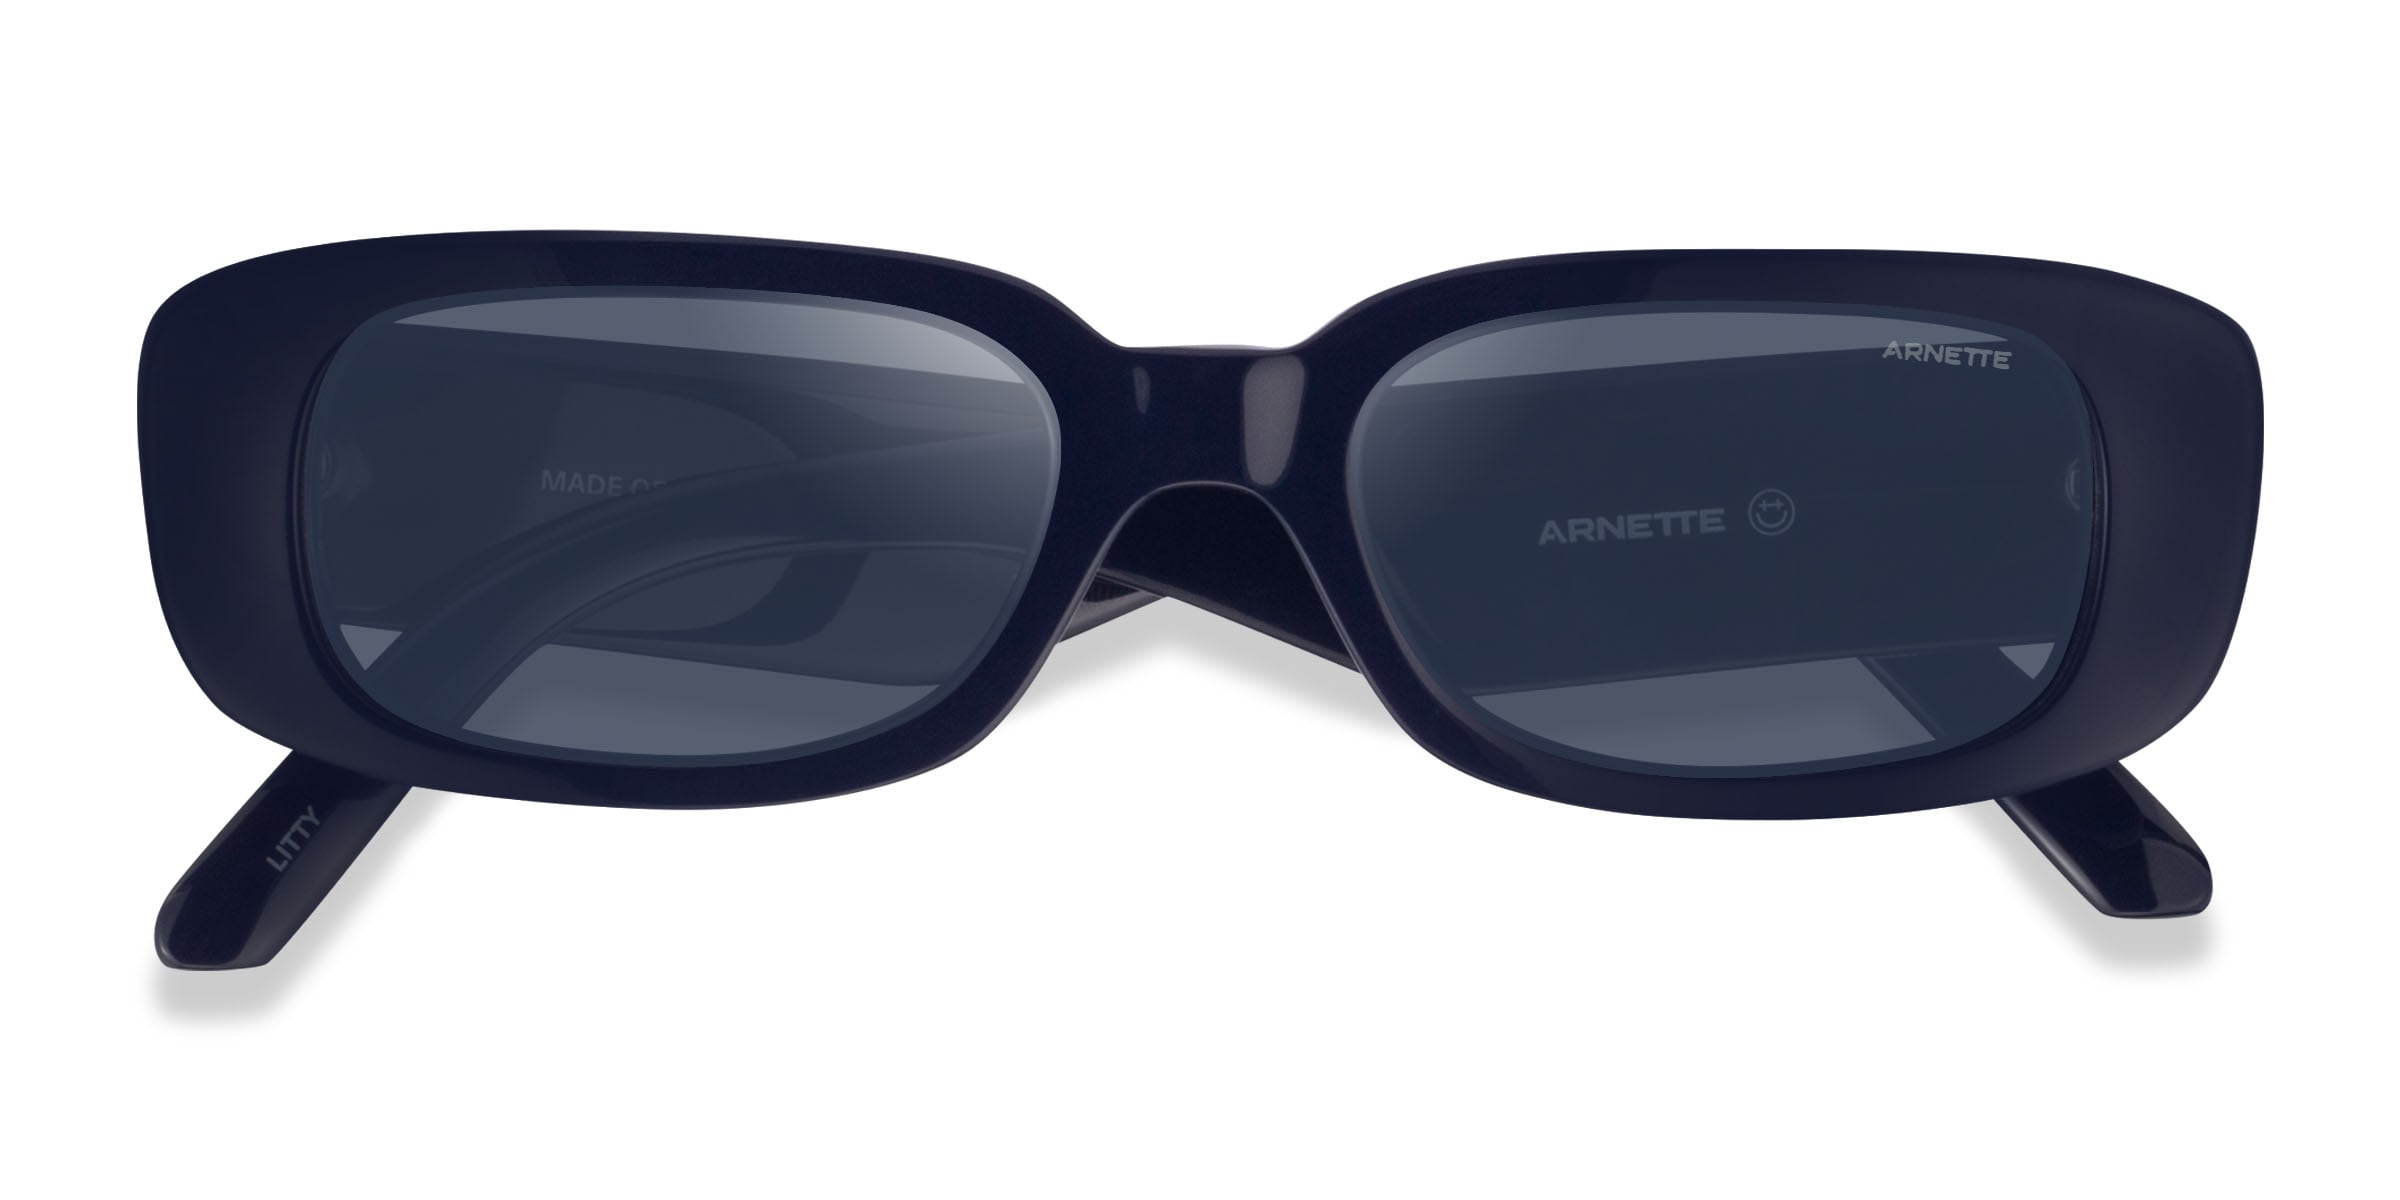 ARNETTE Sunglasses Styles | Eyebuydirect